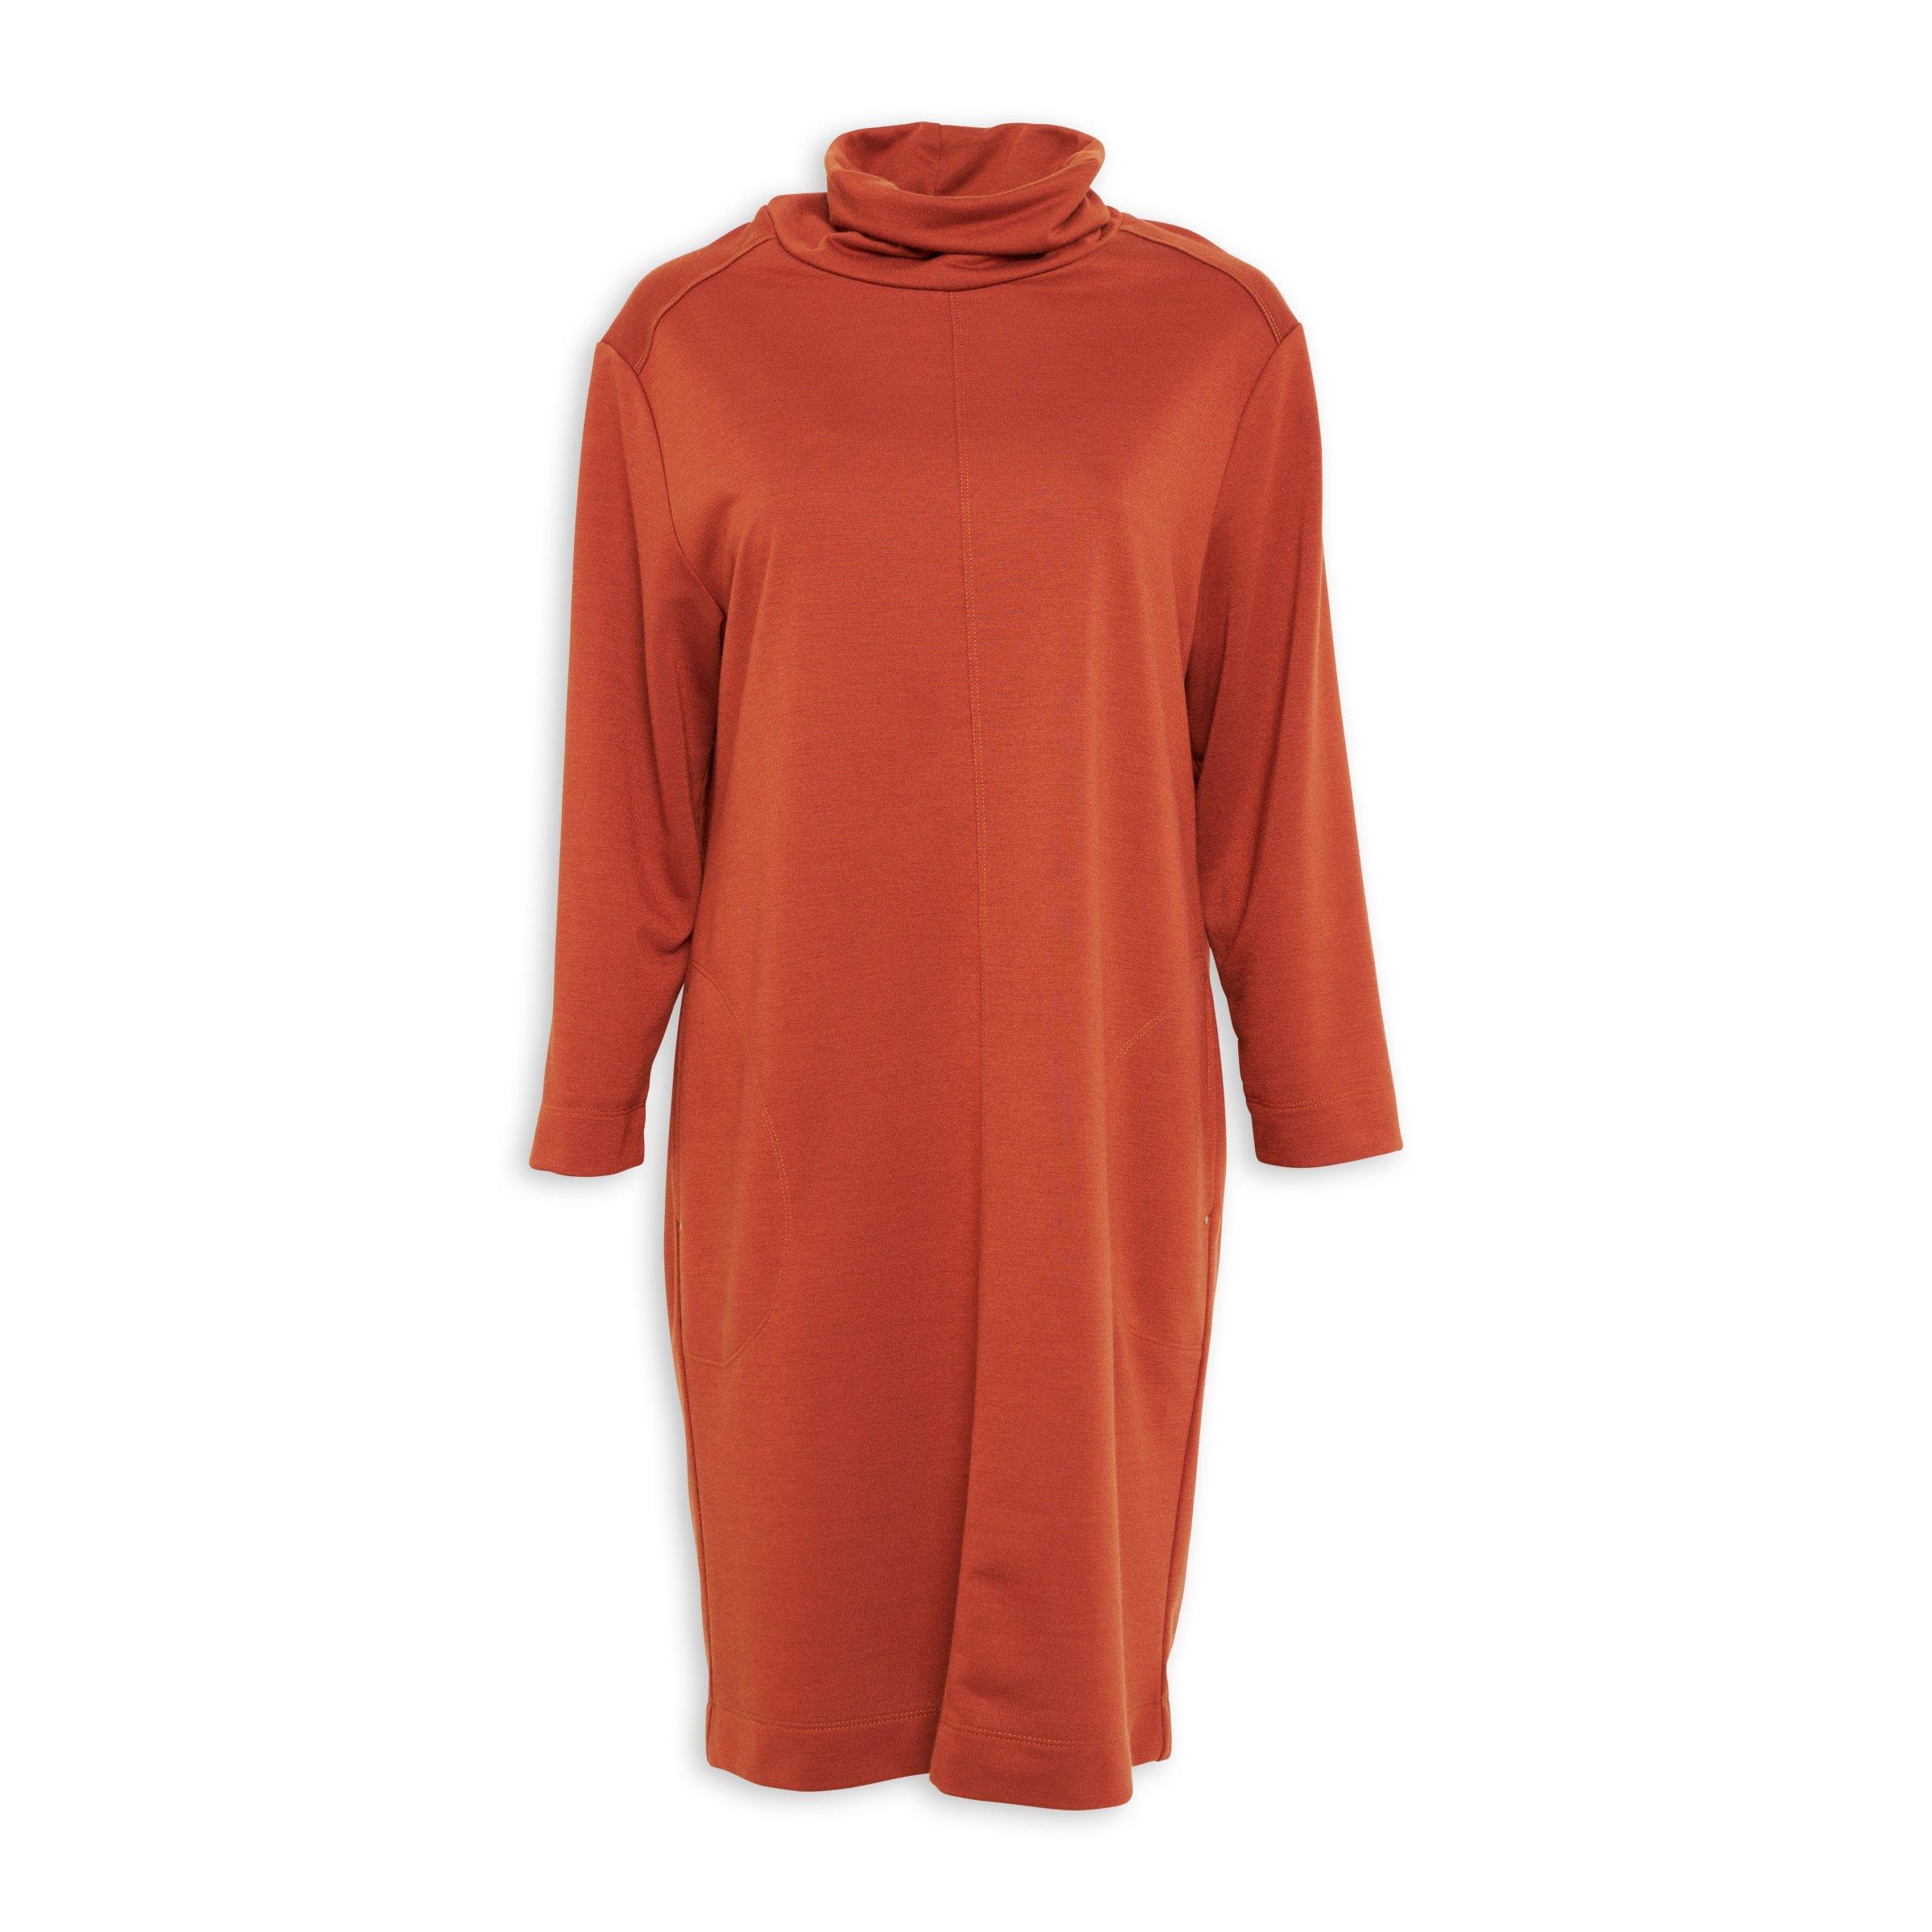 Buy Truworths Rust Fleece Dress Online | Truworths